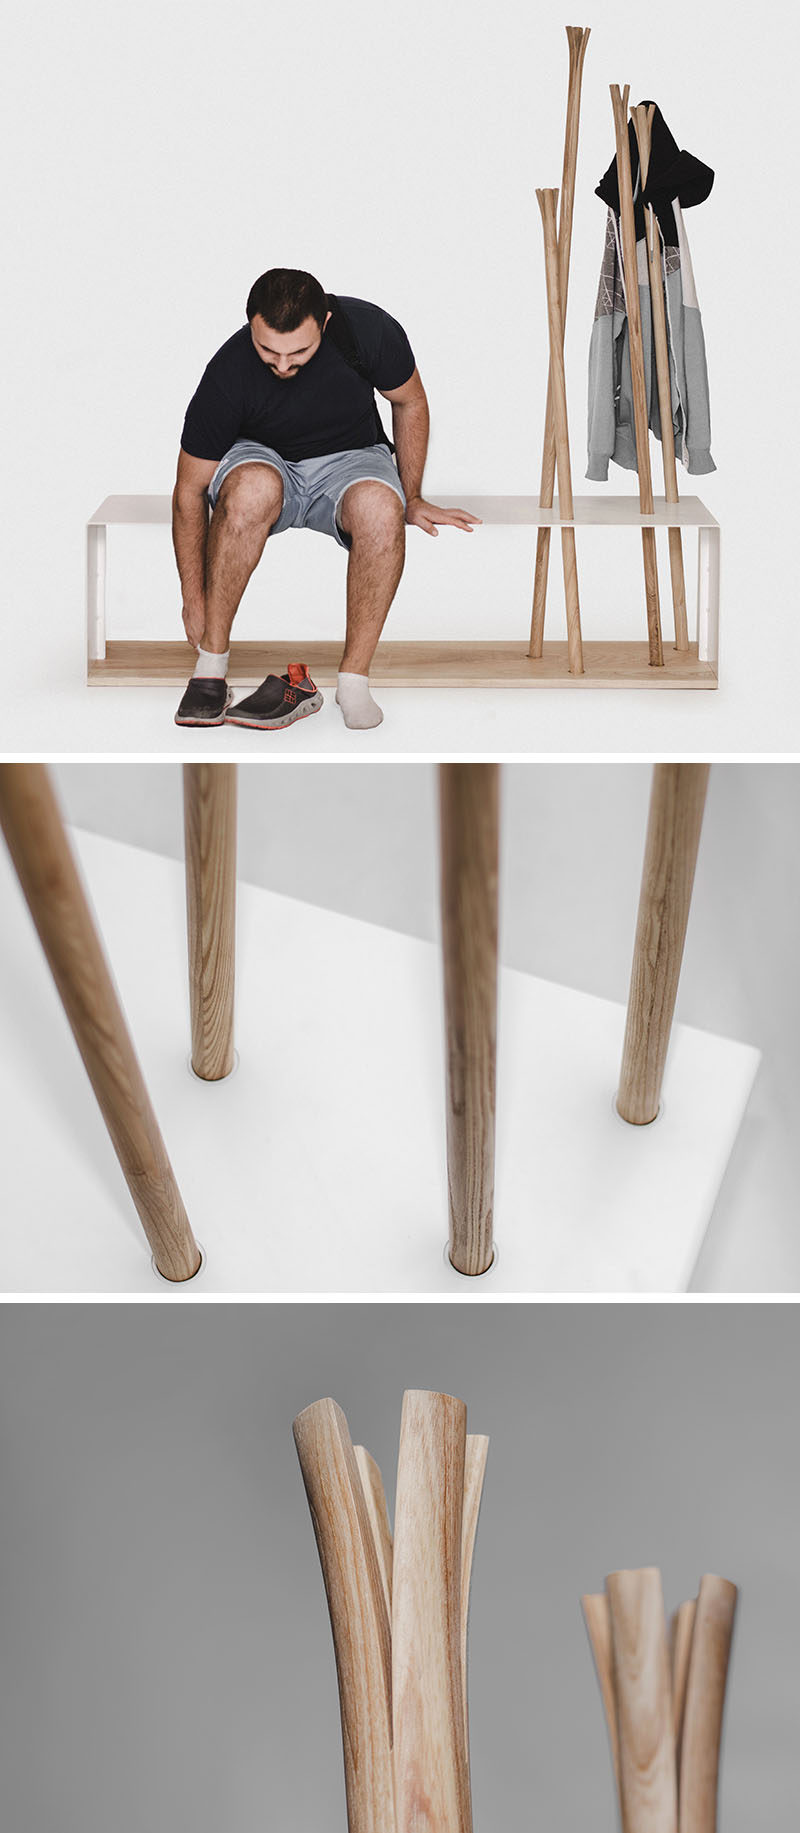 MZPA have designed 'Hilka', a series of two coat racks, a standalone floor coat rack, and a bench coach rack. #CoatRack #Design #FurnitureDesign